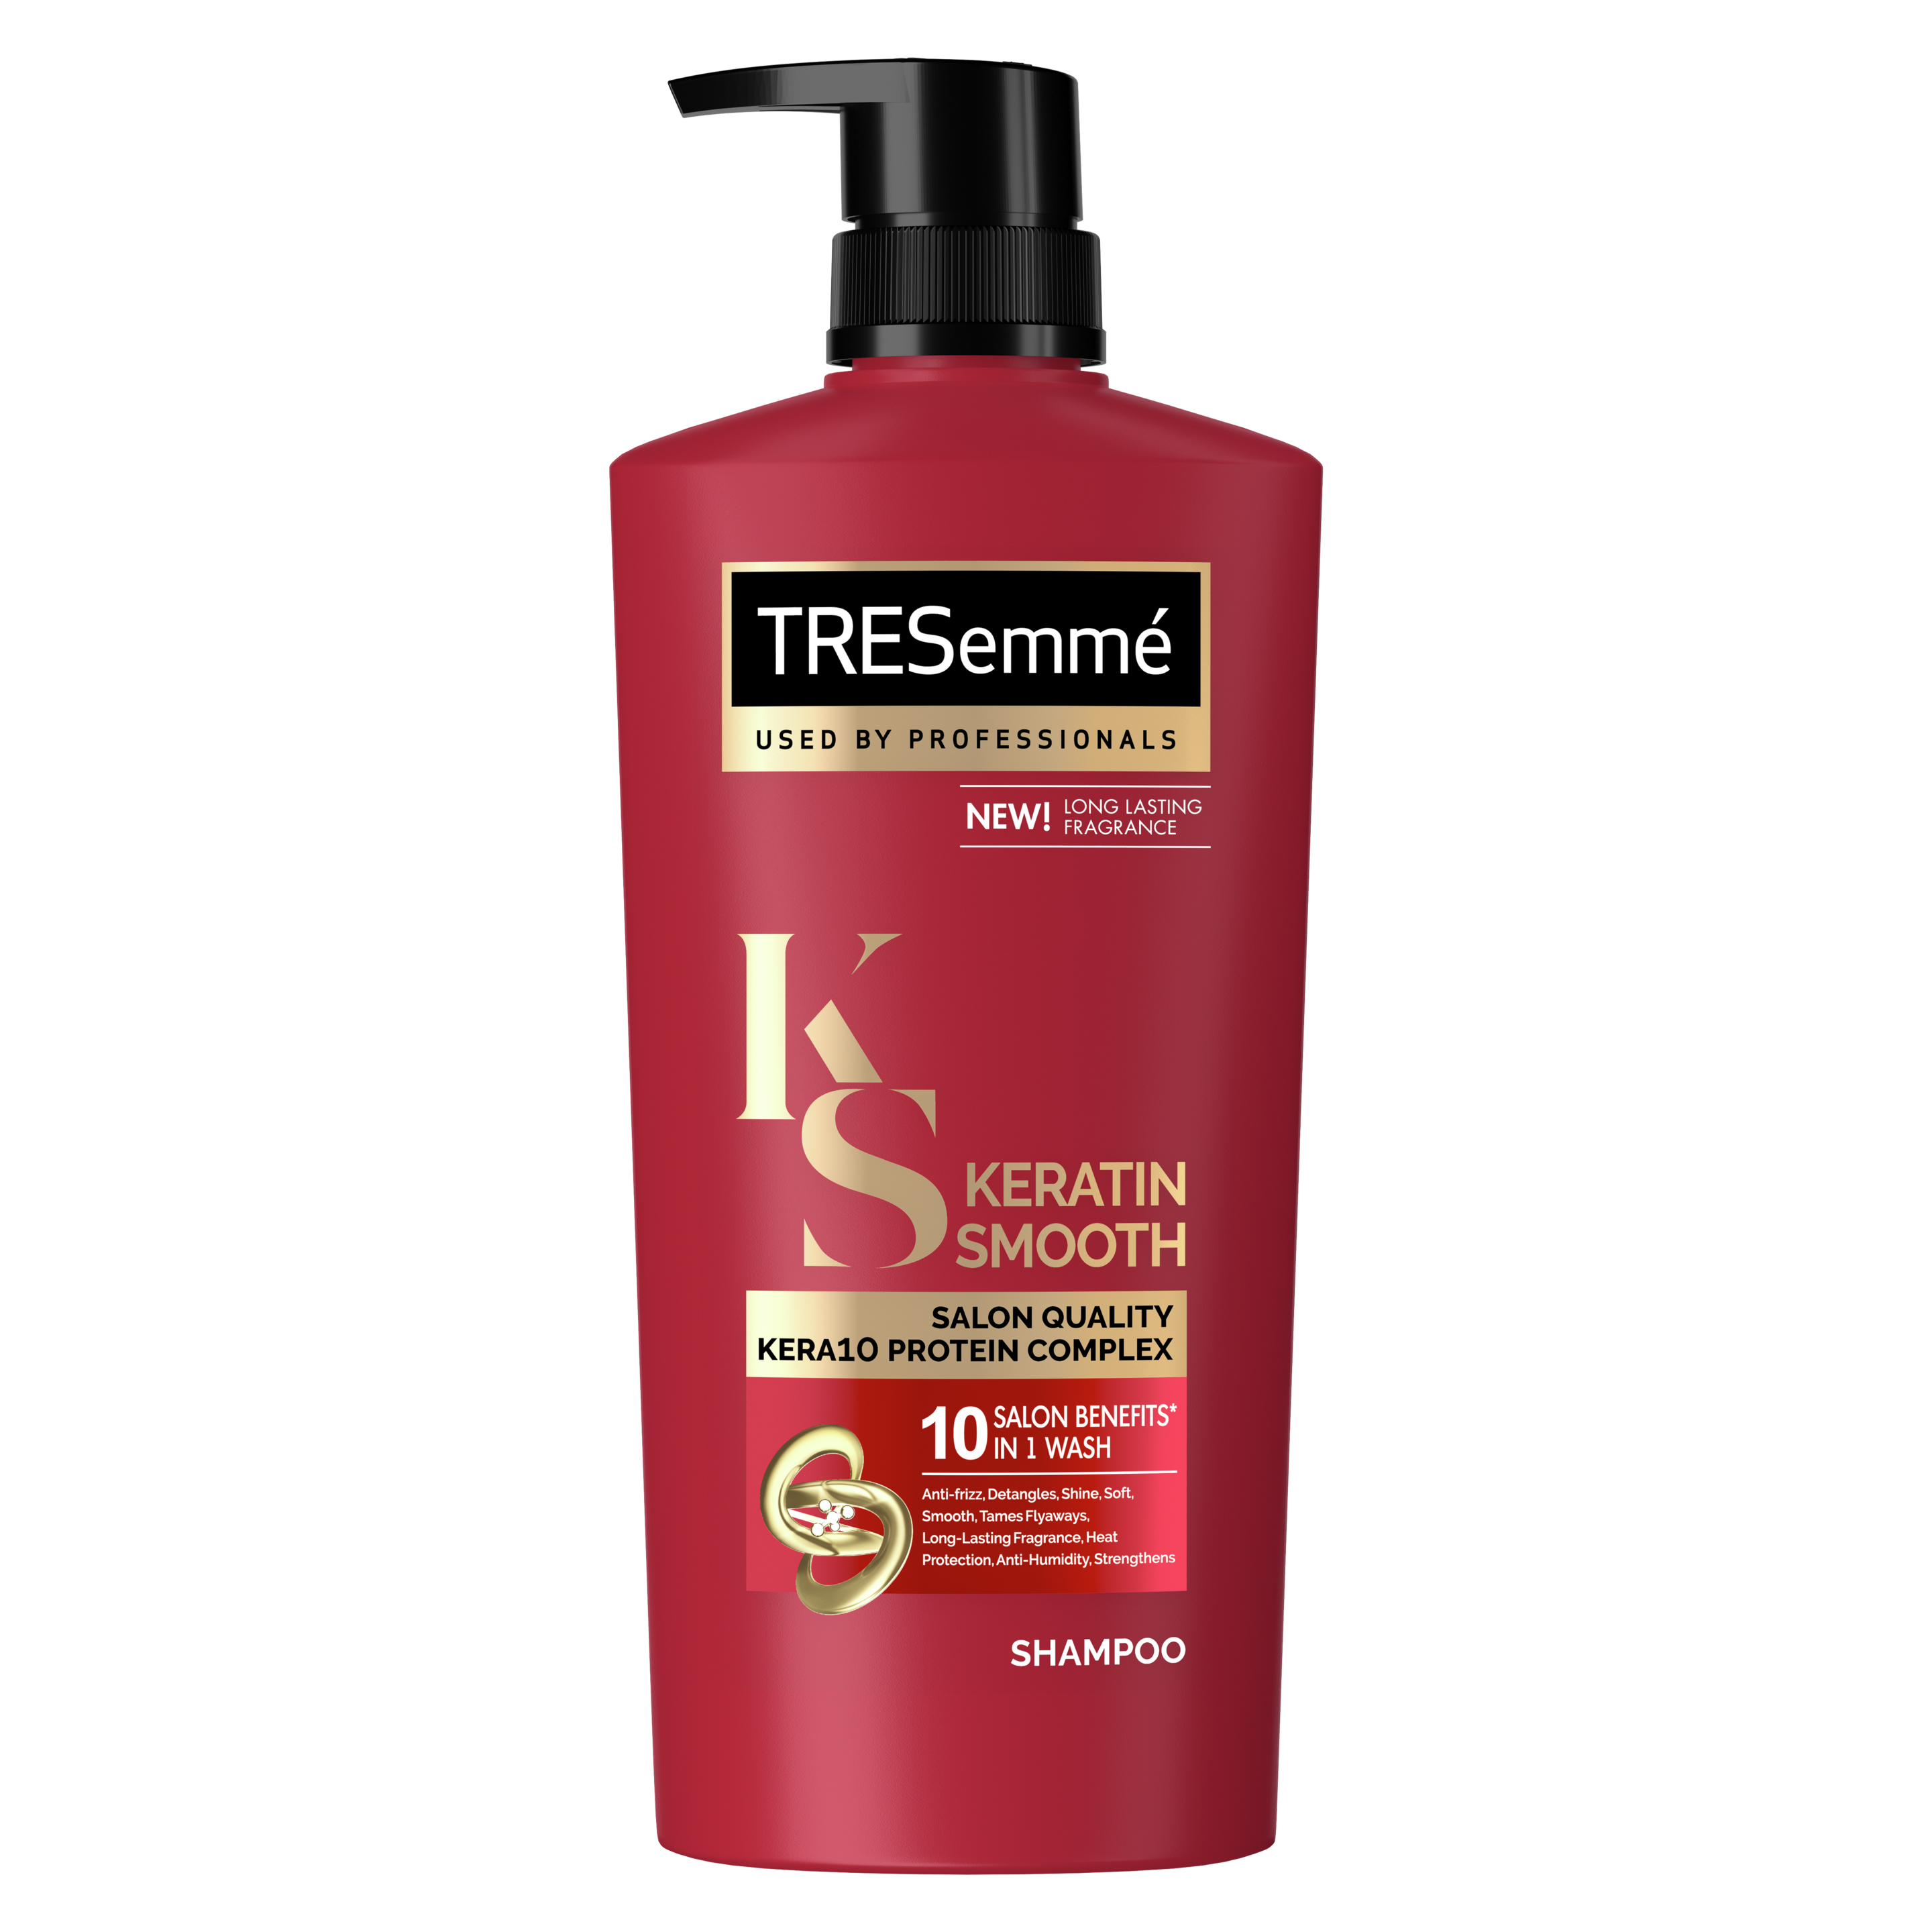 A 620ml bottle of Keratin Smooth KERA10 Shampoo